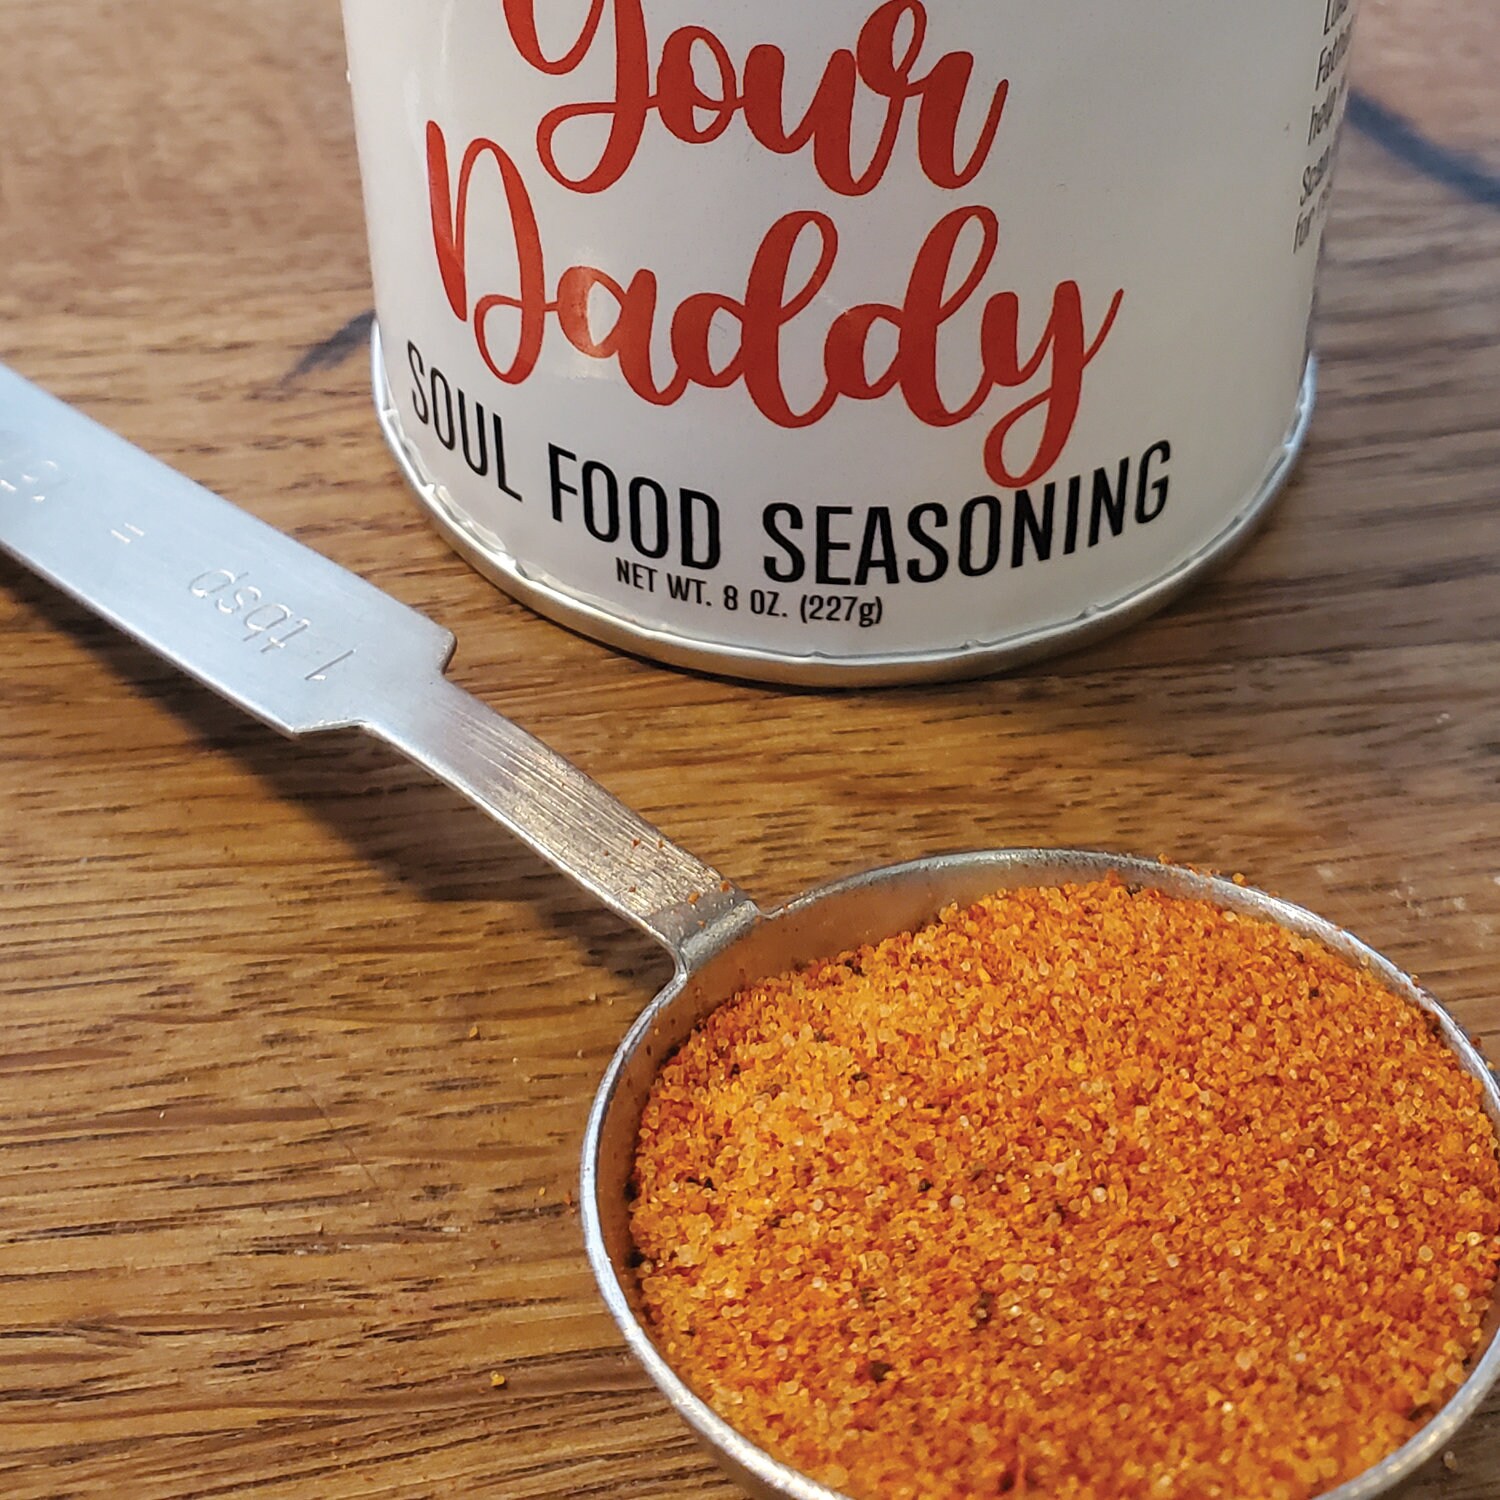 Soul Food Seasoning Recipe